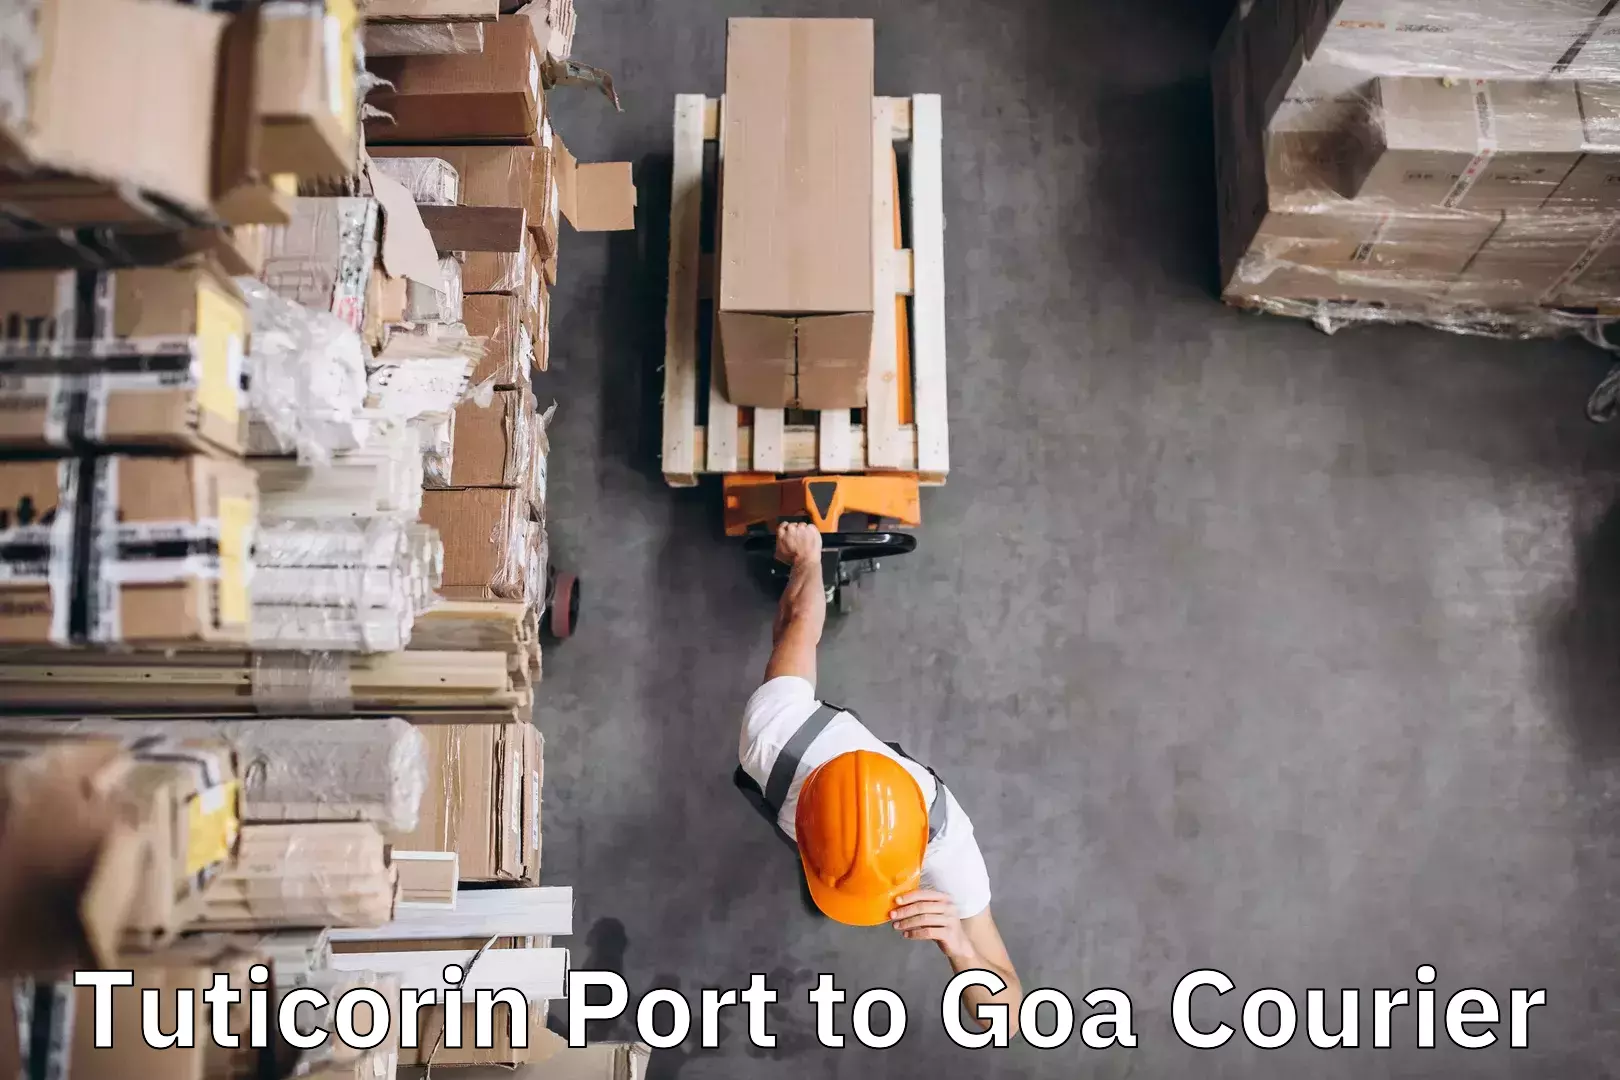 Luggage transport service Tuticorin Port to South Goa